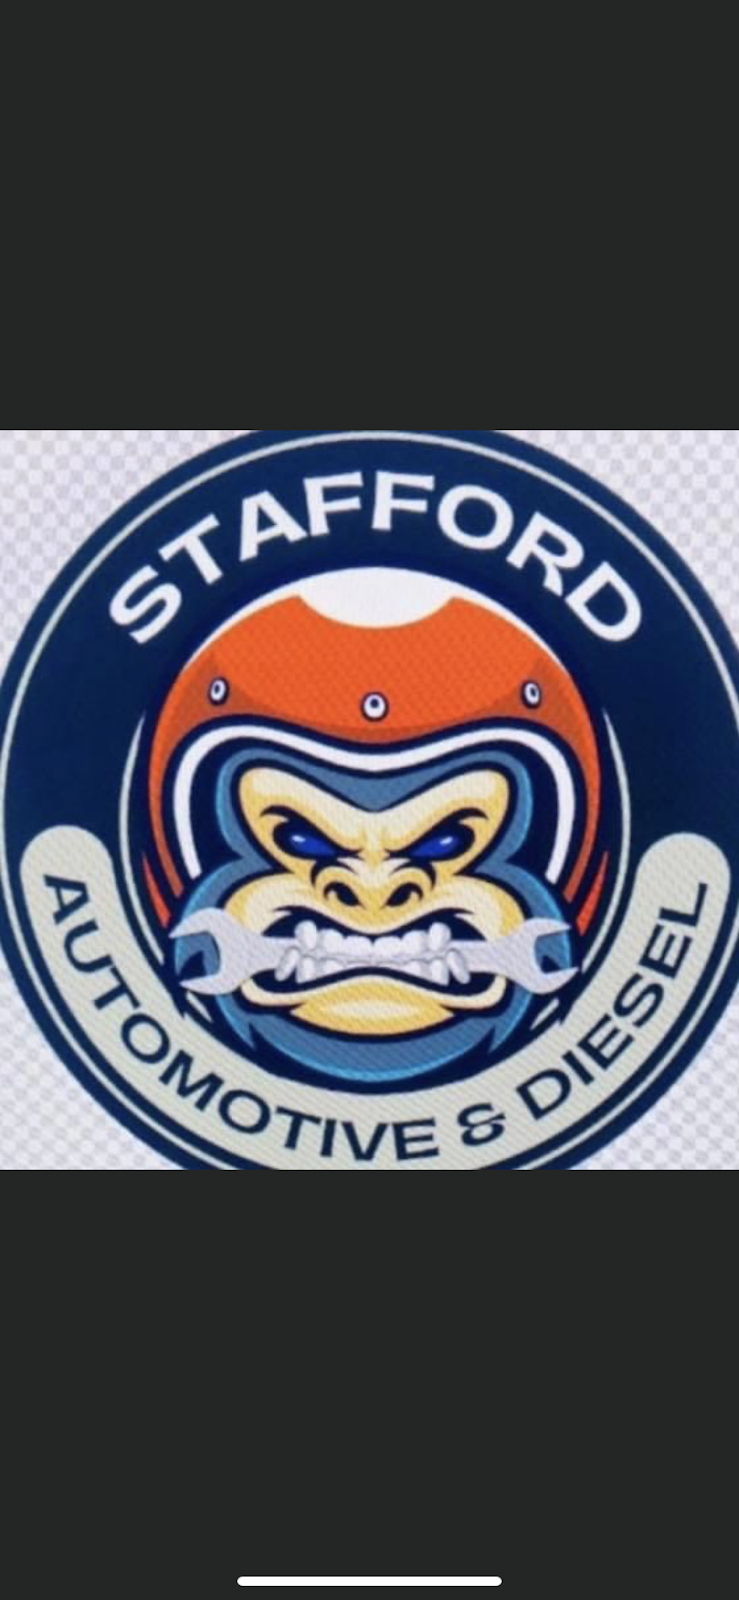 Stafford Automotive and Diesel | 101 E Main St, Coyle, OK 73027, USA | Phone: (405) 859-6391